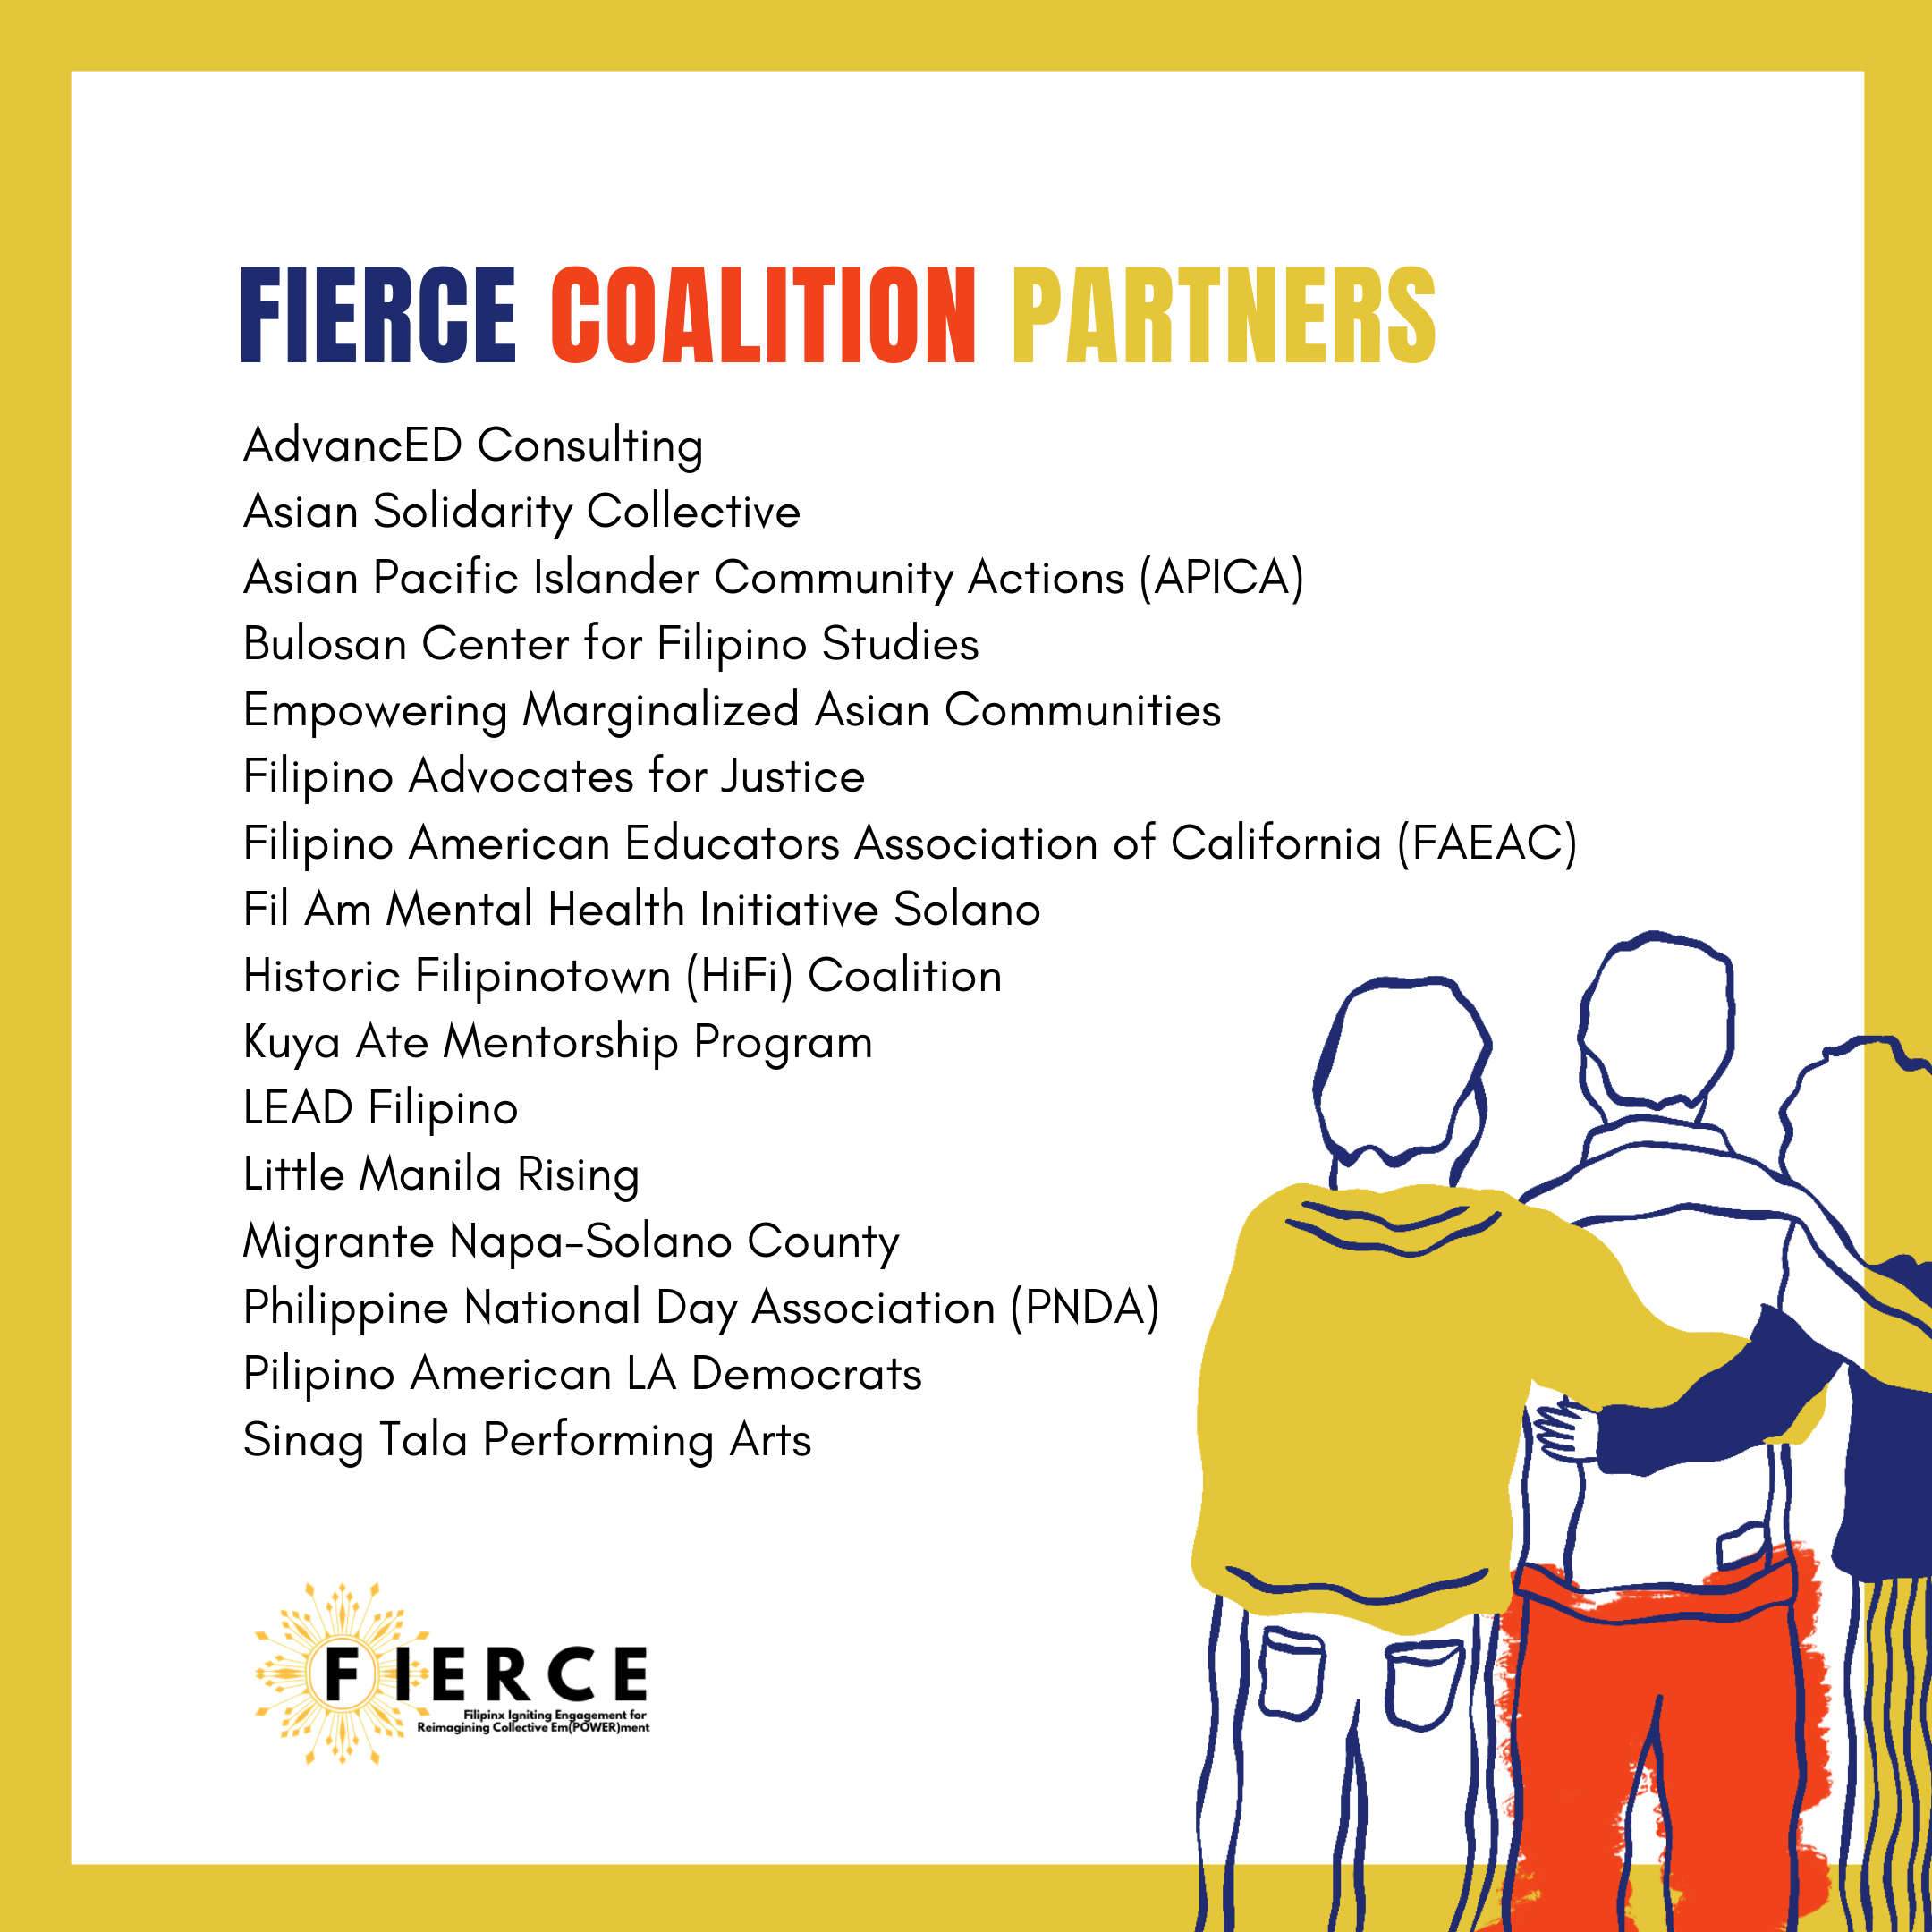 FIERCE Coalition Partners